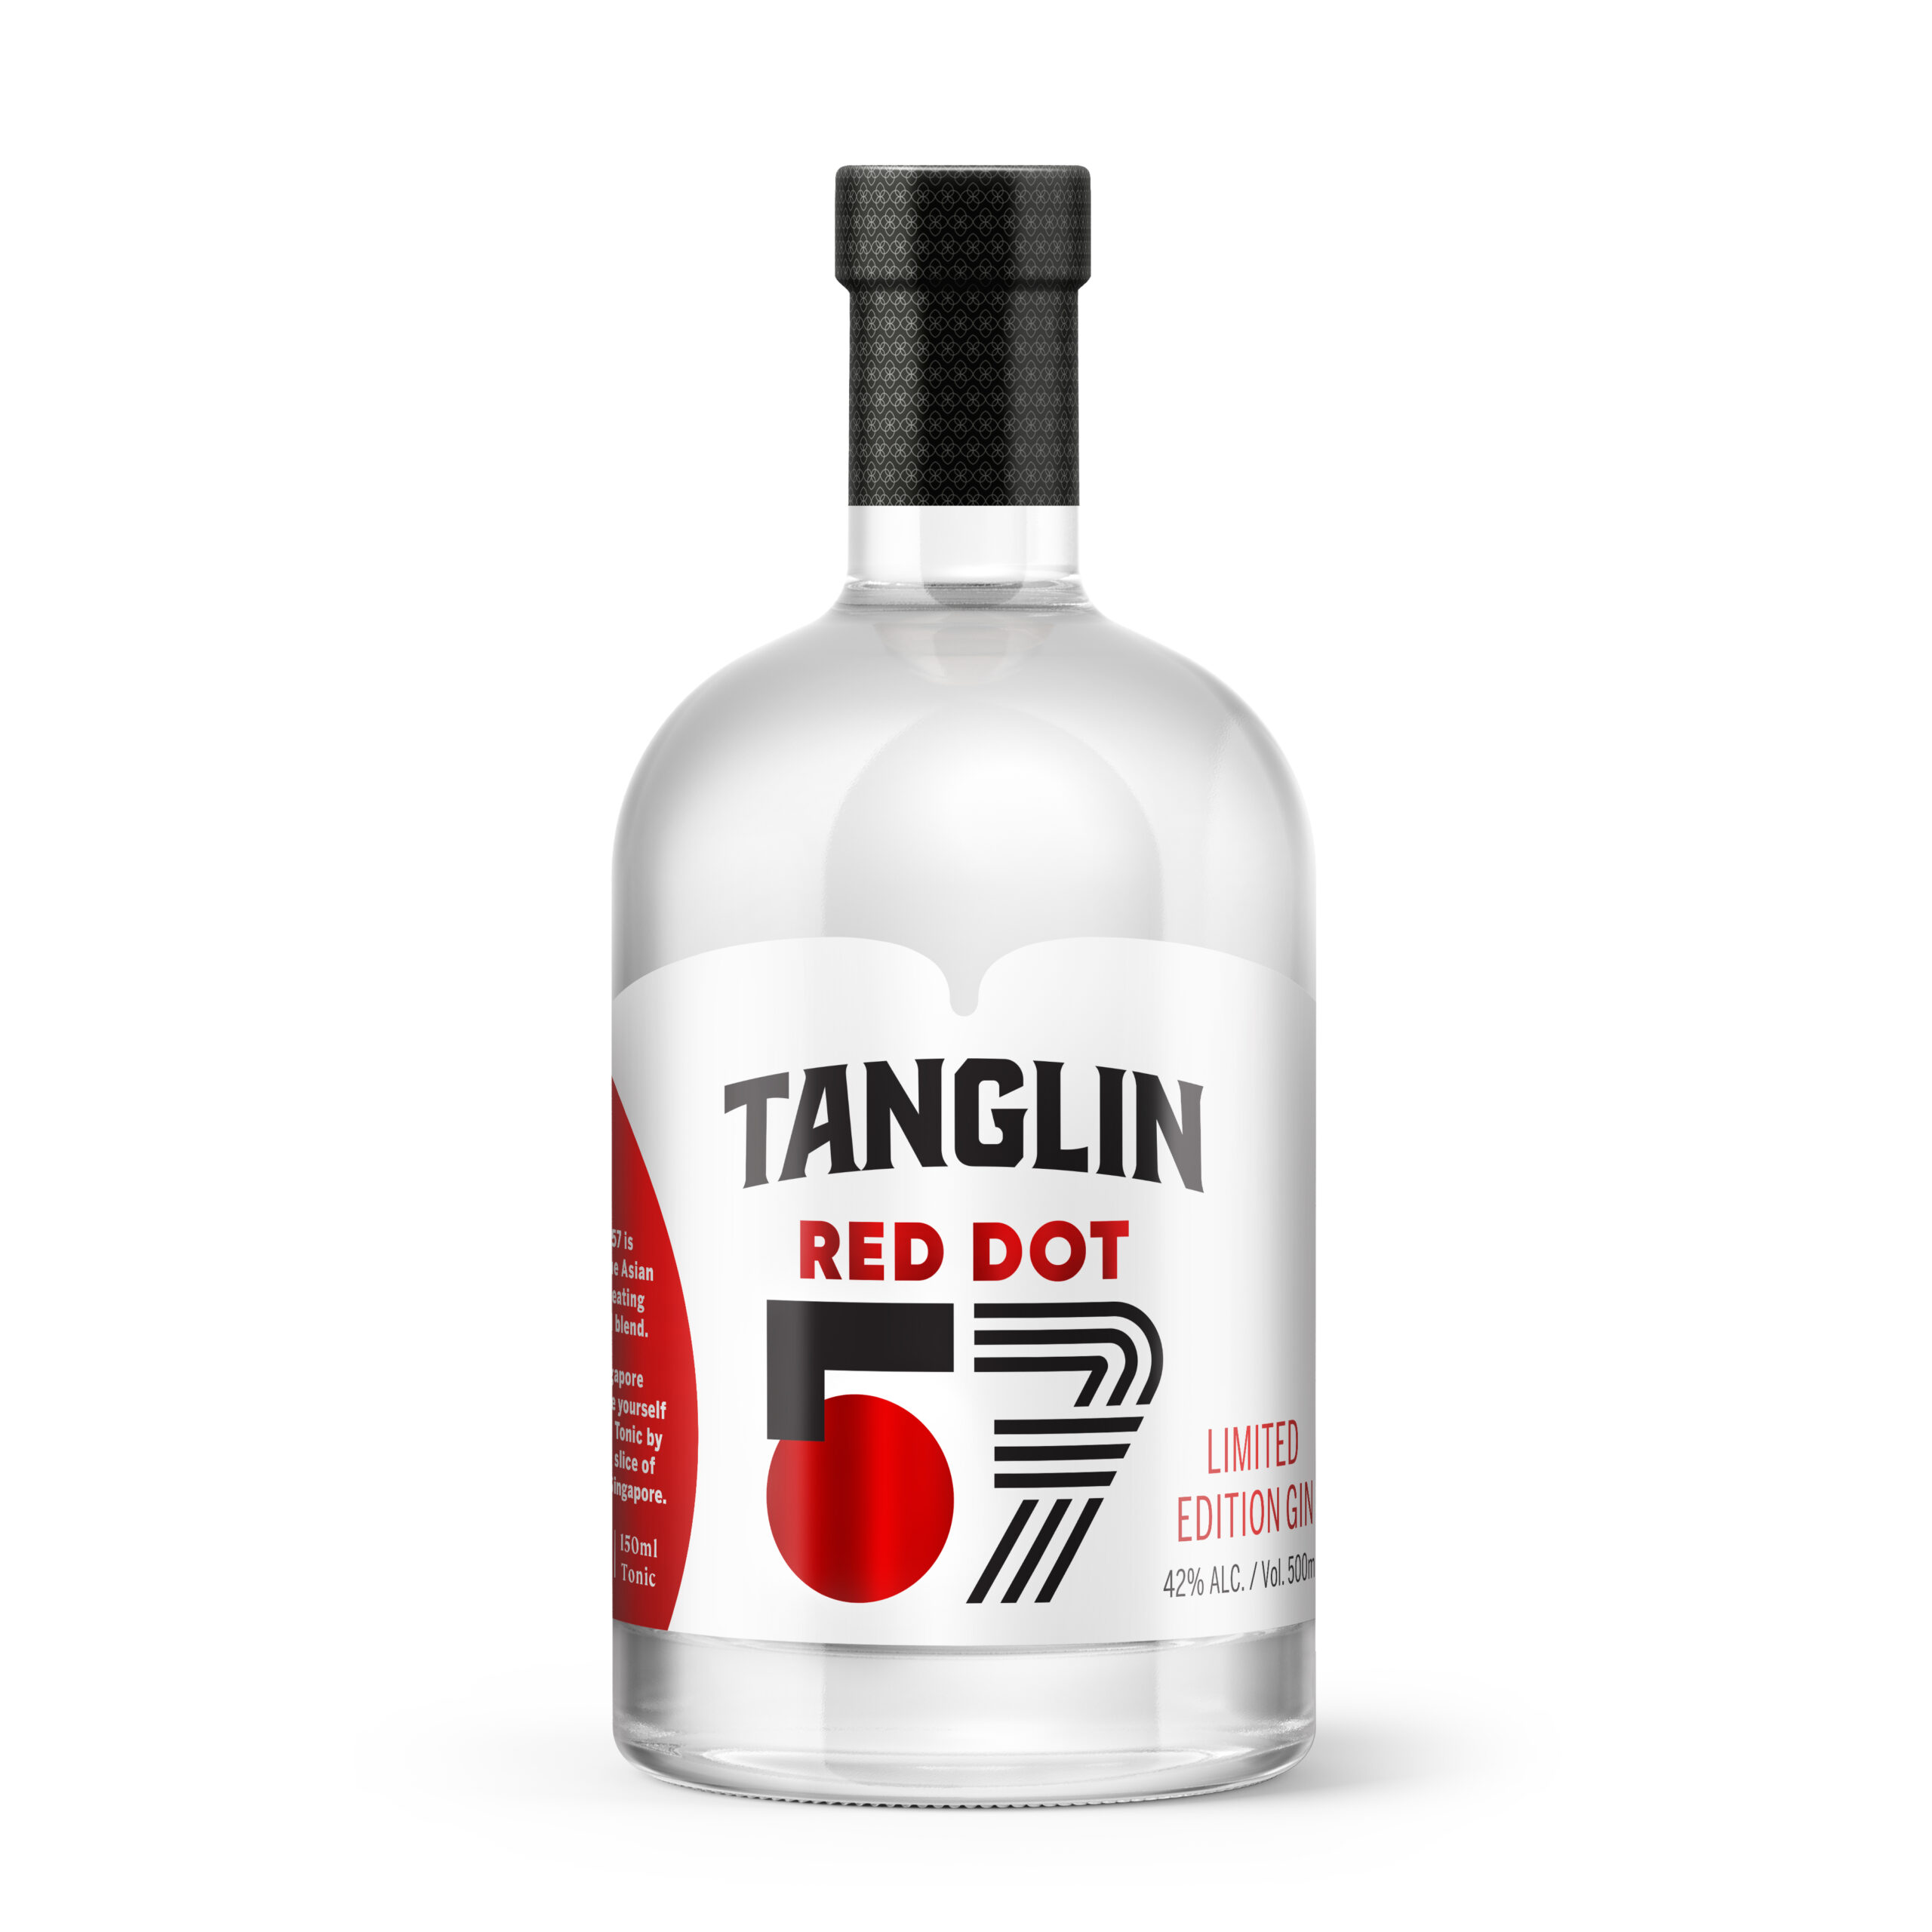 Tanglin Red Dot 57 Gin